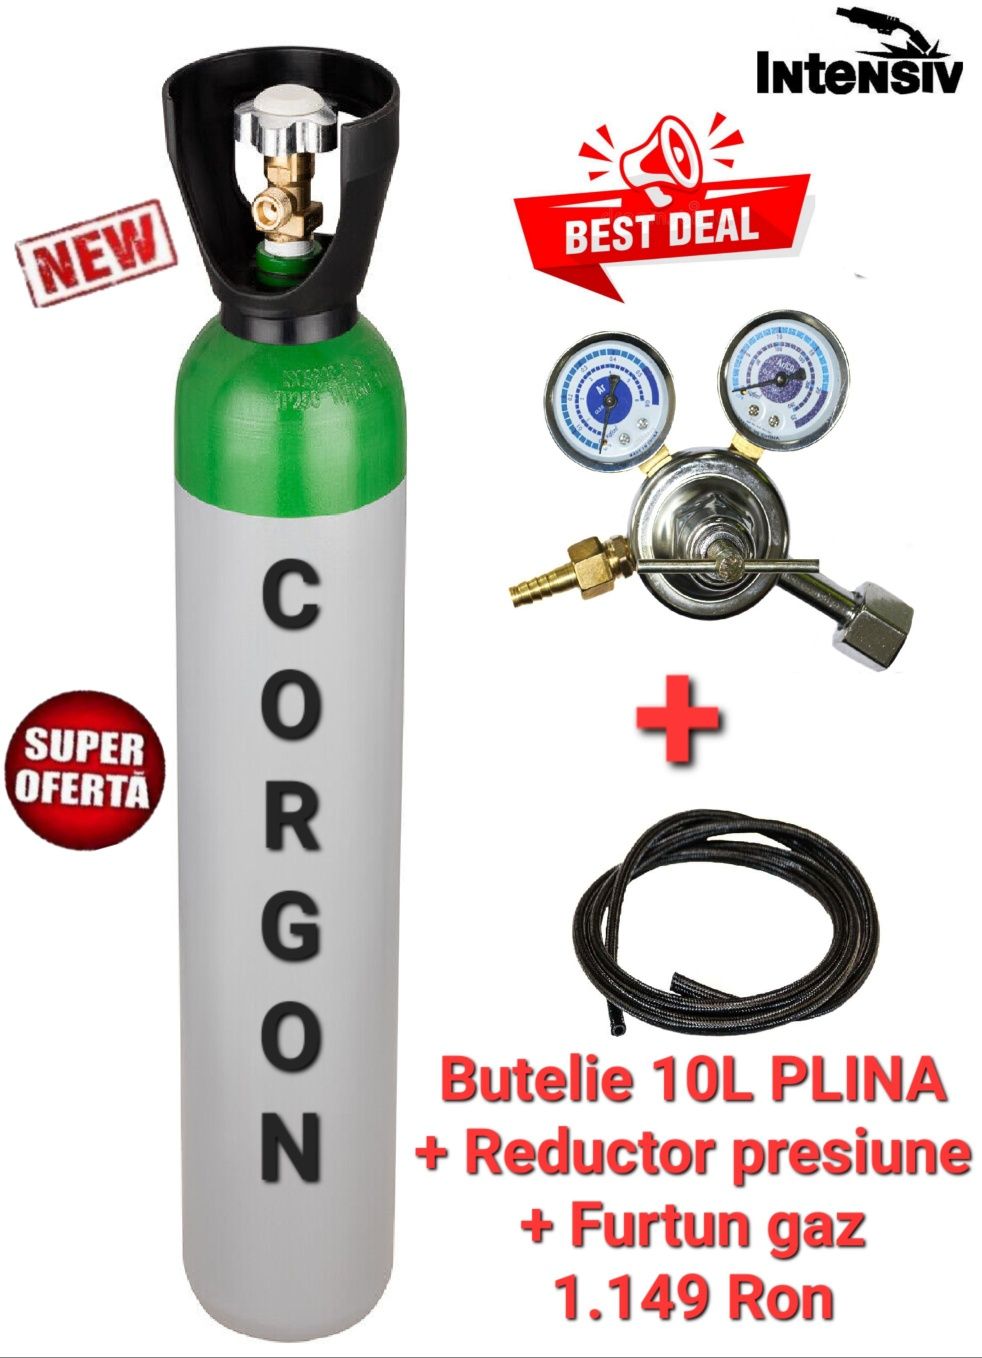 Butelie Corgon 10L PLINA+Reductor+Furtun gaz-pentru sudura Mig-Mag/Tig